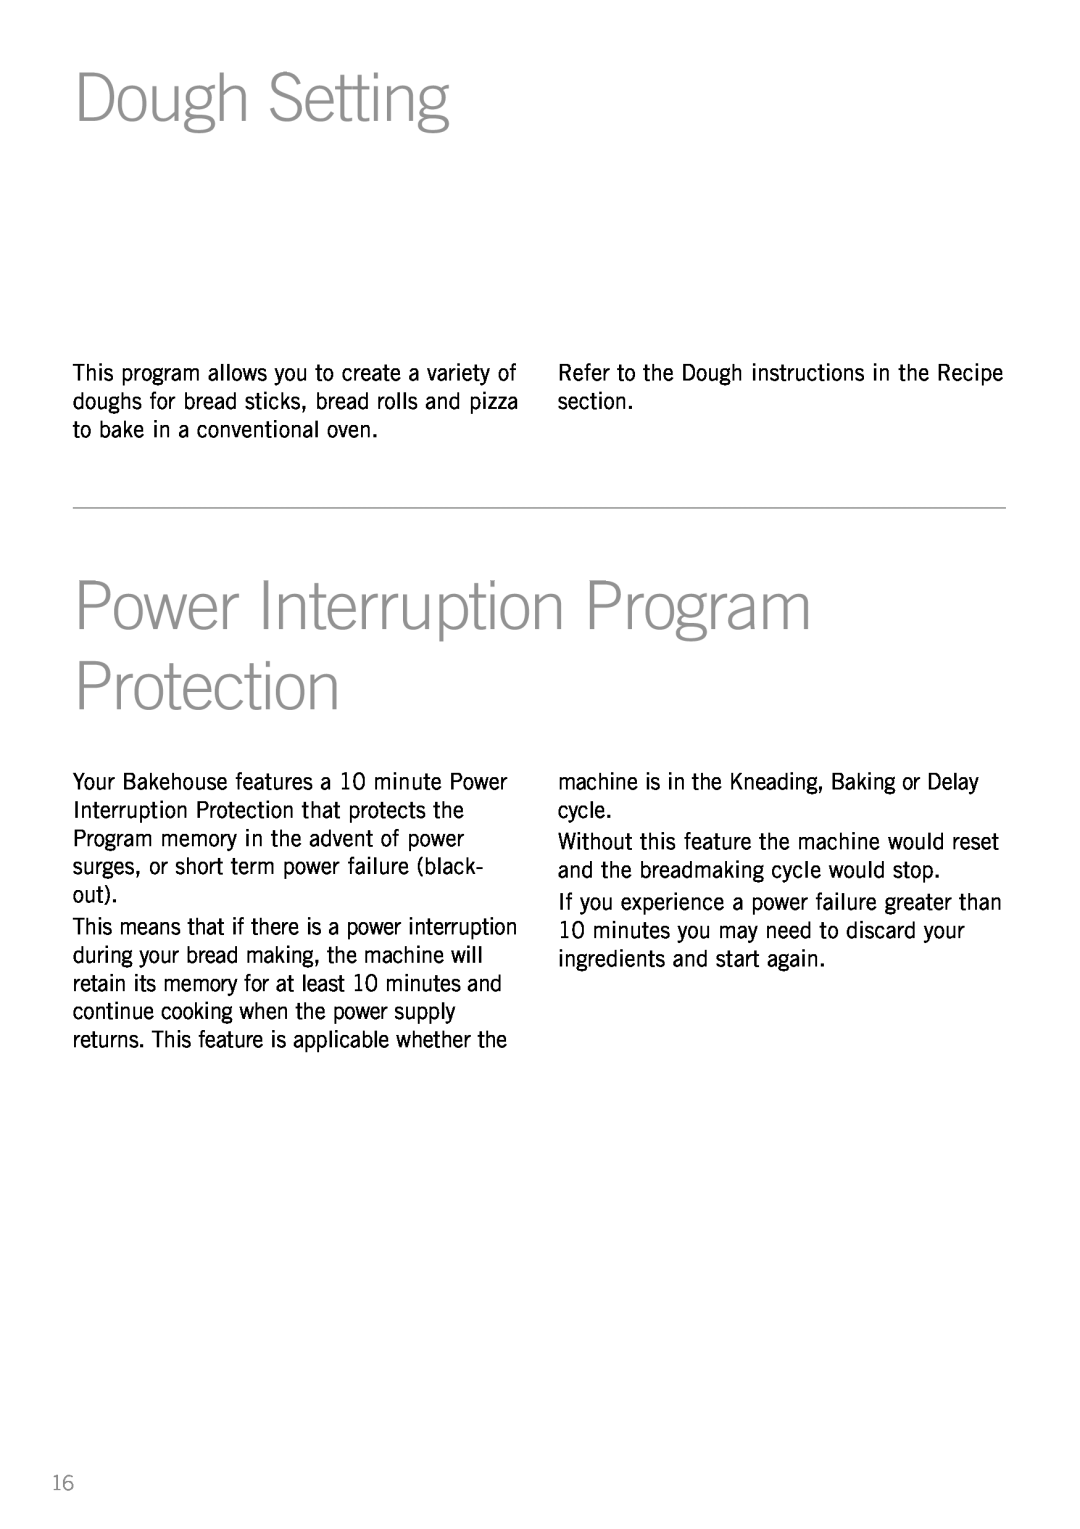 Sunbeam BM3500 manual Dough Setting, Power Interruption Program Protection 